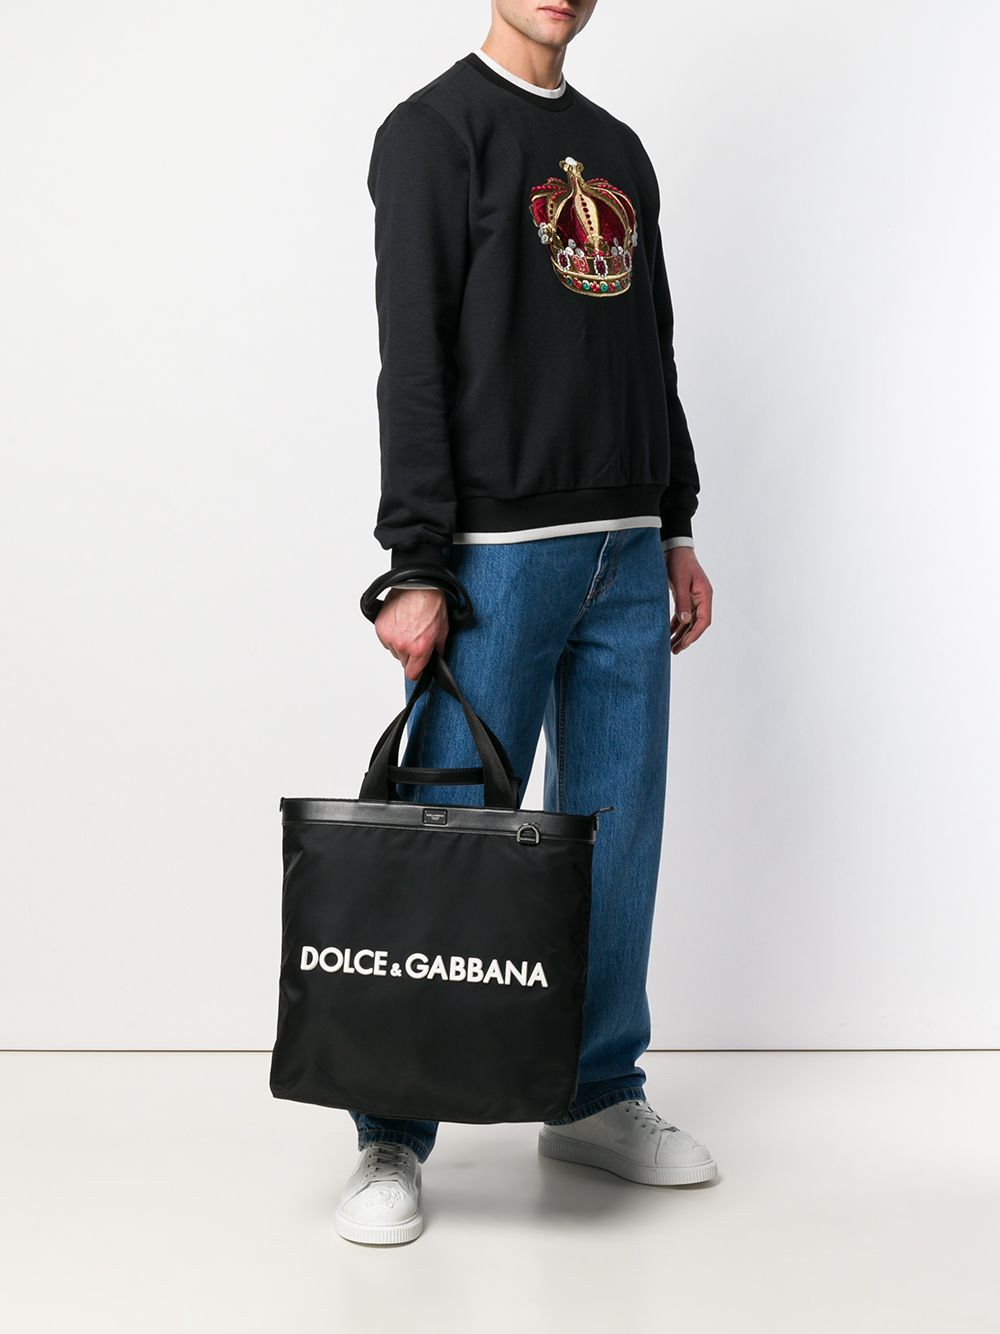 фото Dolce & Gabbana сумка-шопер с логотипом